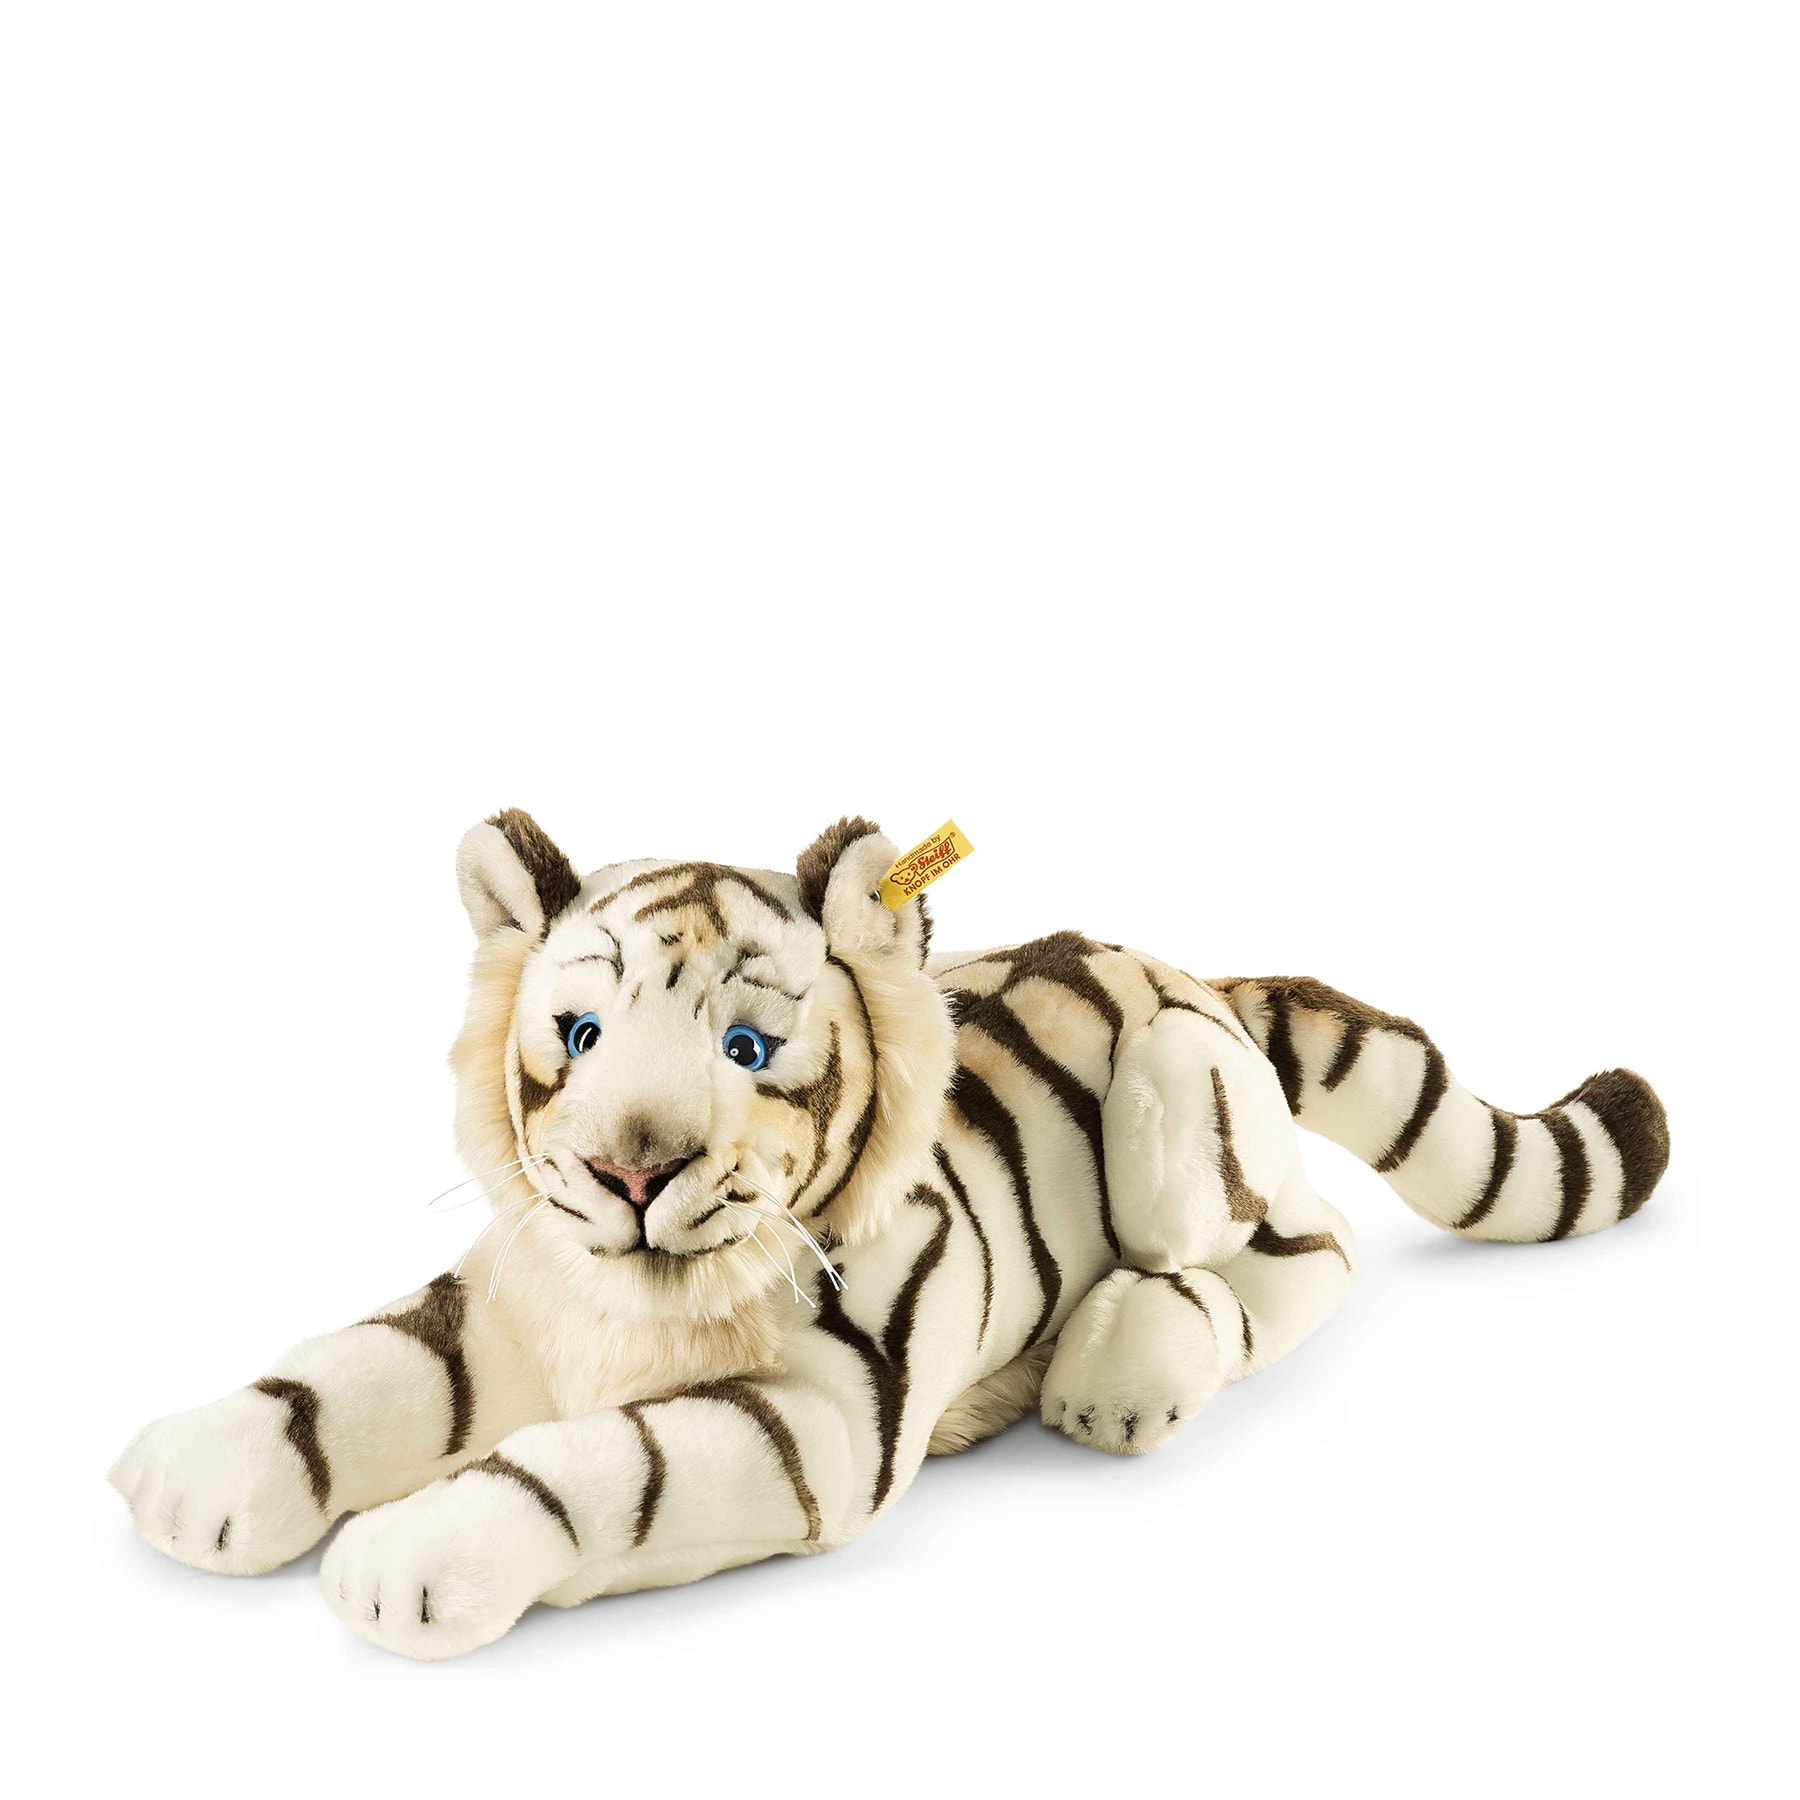 Bharat, the white tiger